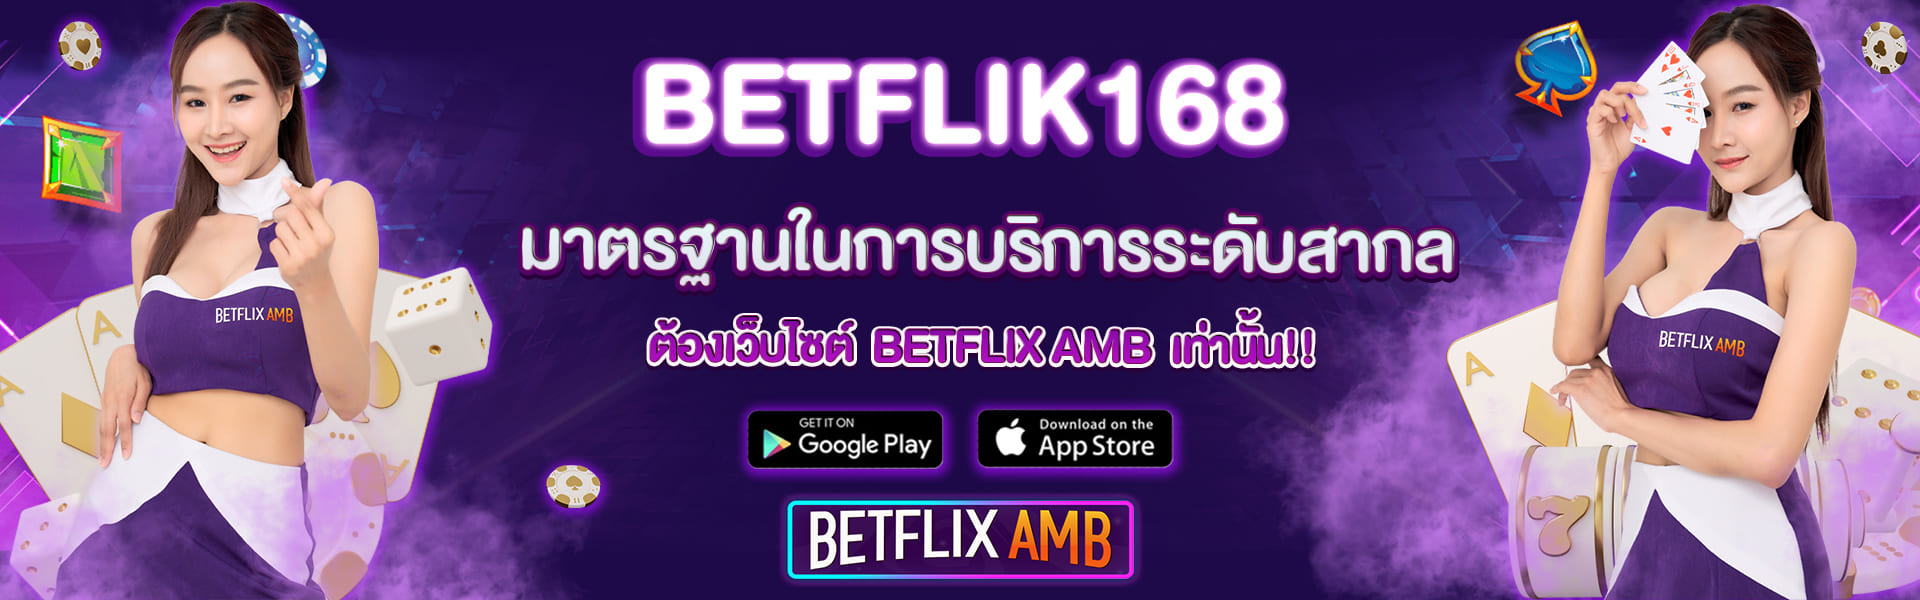 BETFLIK168